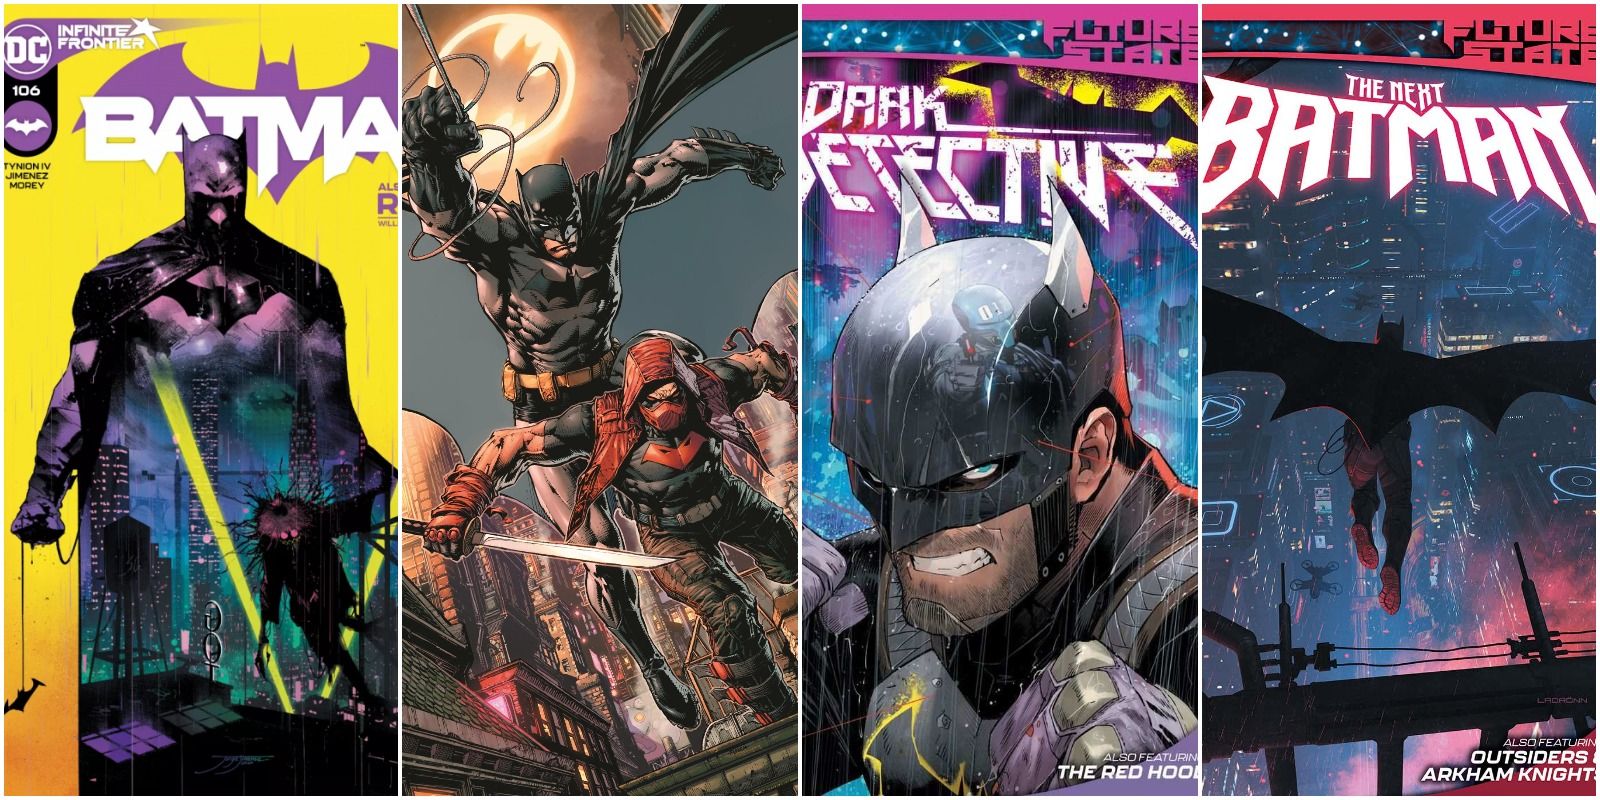 Cover artwork for Batman #106, Urban Legends #1, Future State: Dark Detective #2 and Future State: The Next Batman #1